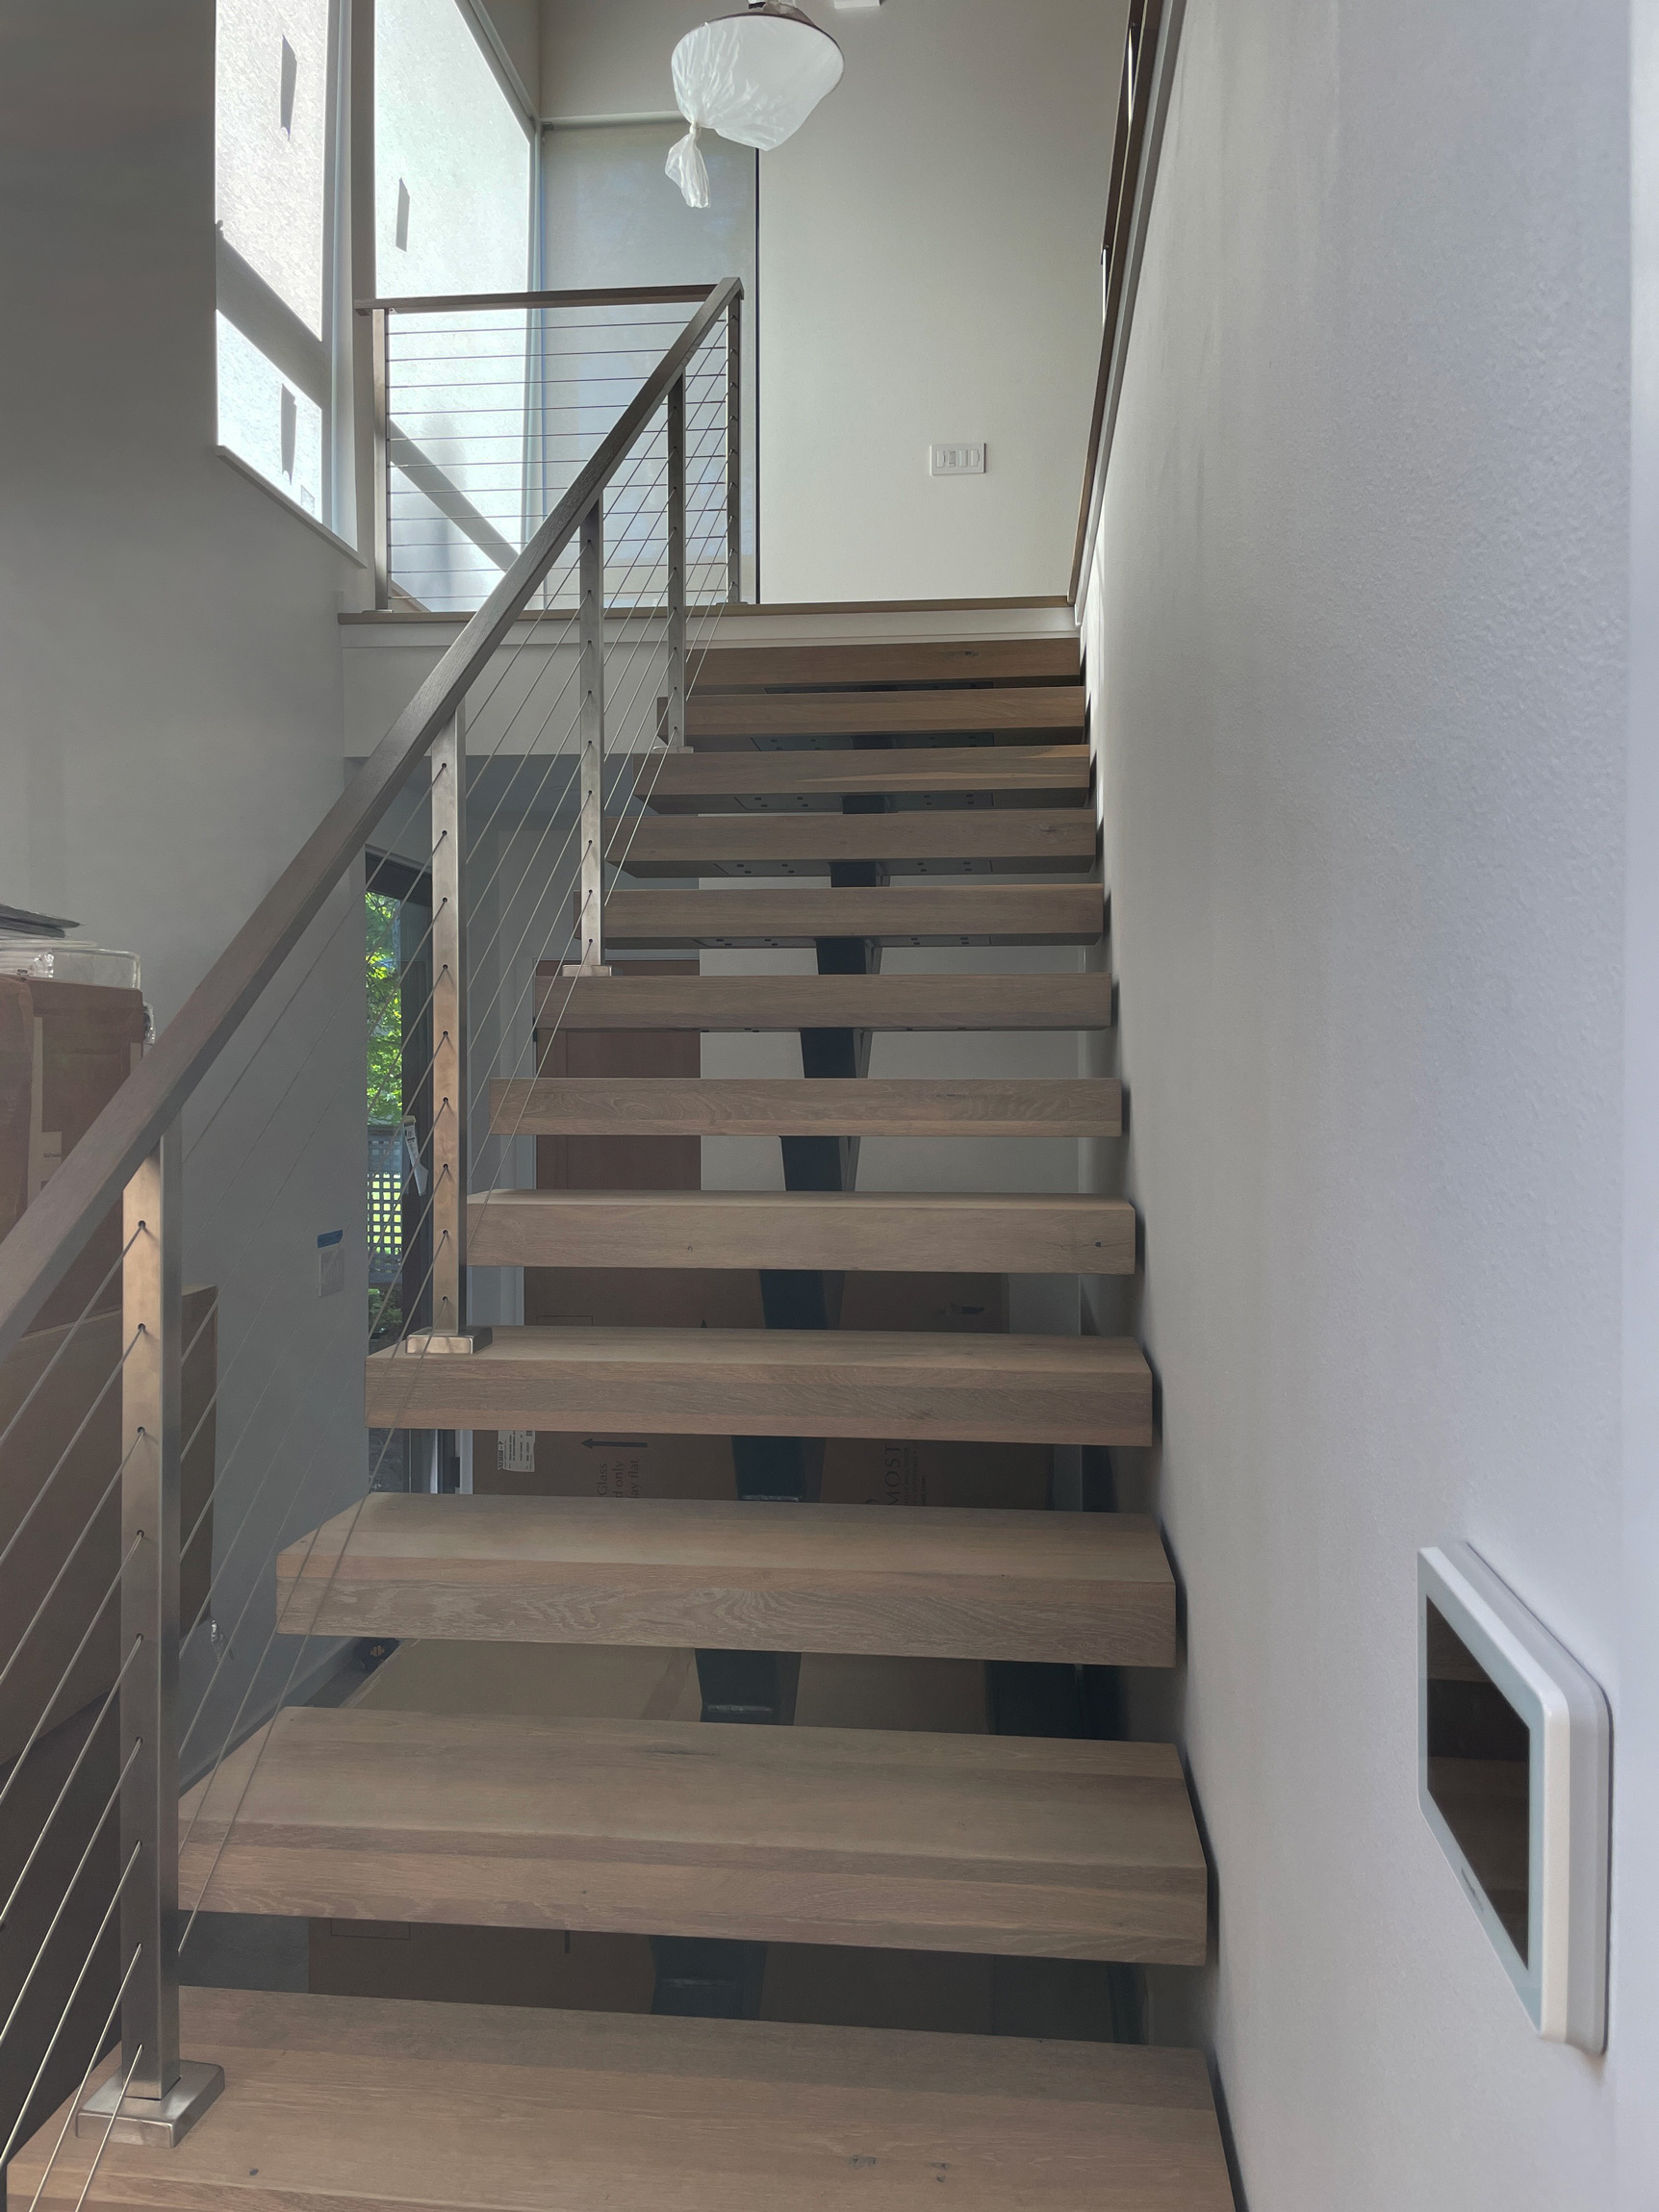 San Juan Island Residence featuring CHEERIO European White Oak Flooring and Stair Treads